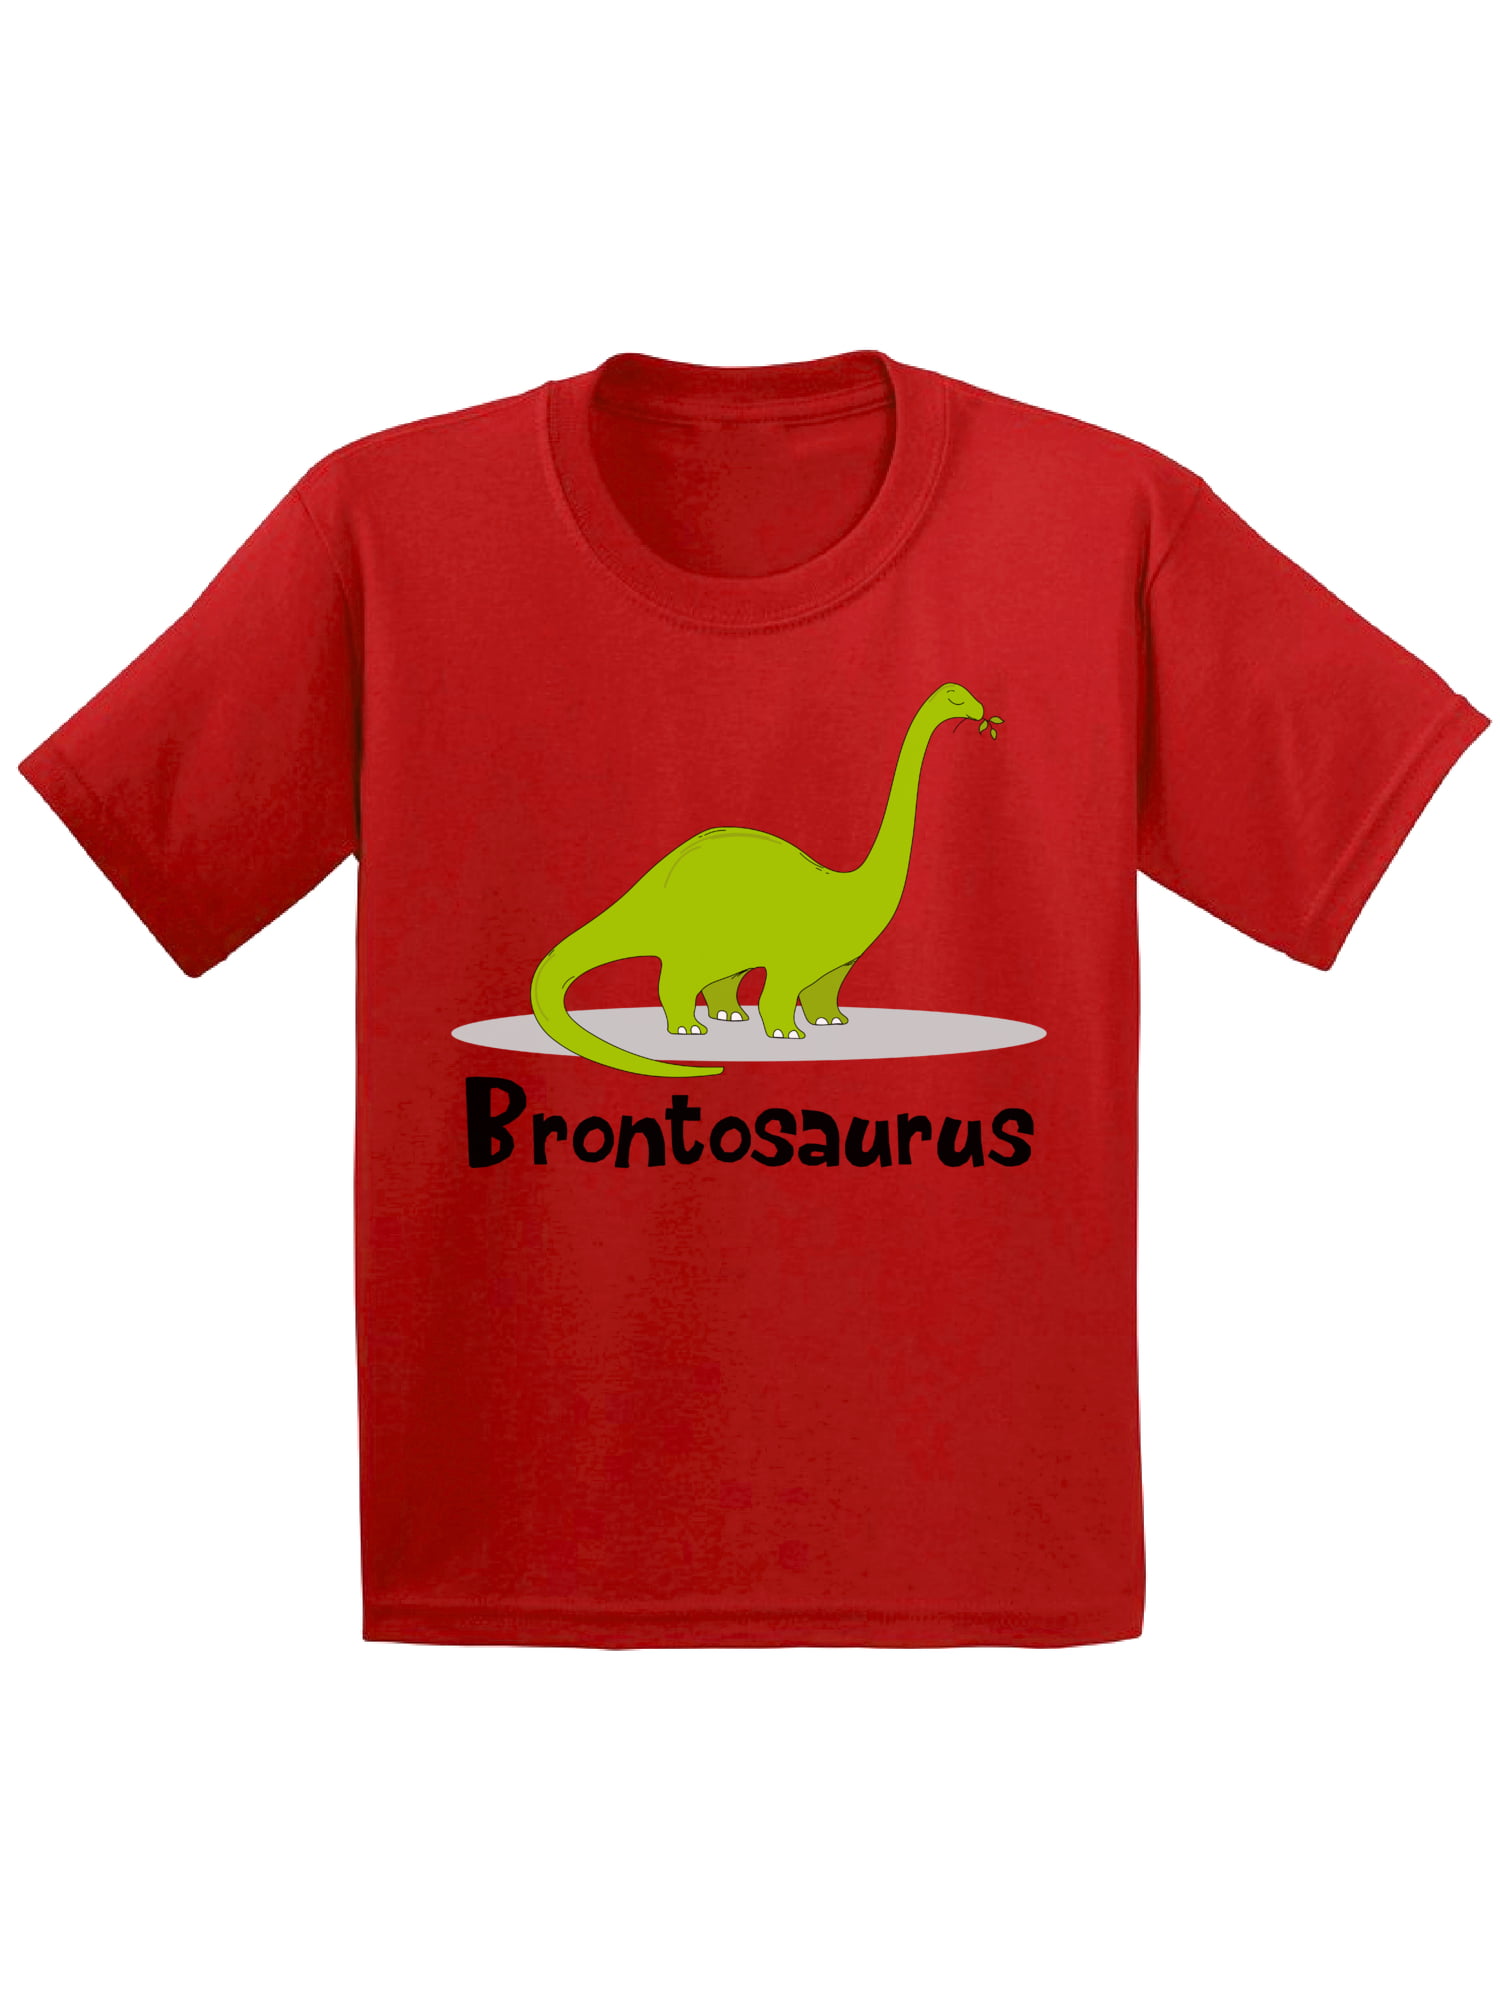 You Had Me at Brontosaurus Dinosaur Logo Kids Tee Shirt 2T-XL 